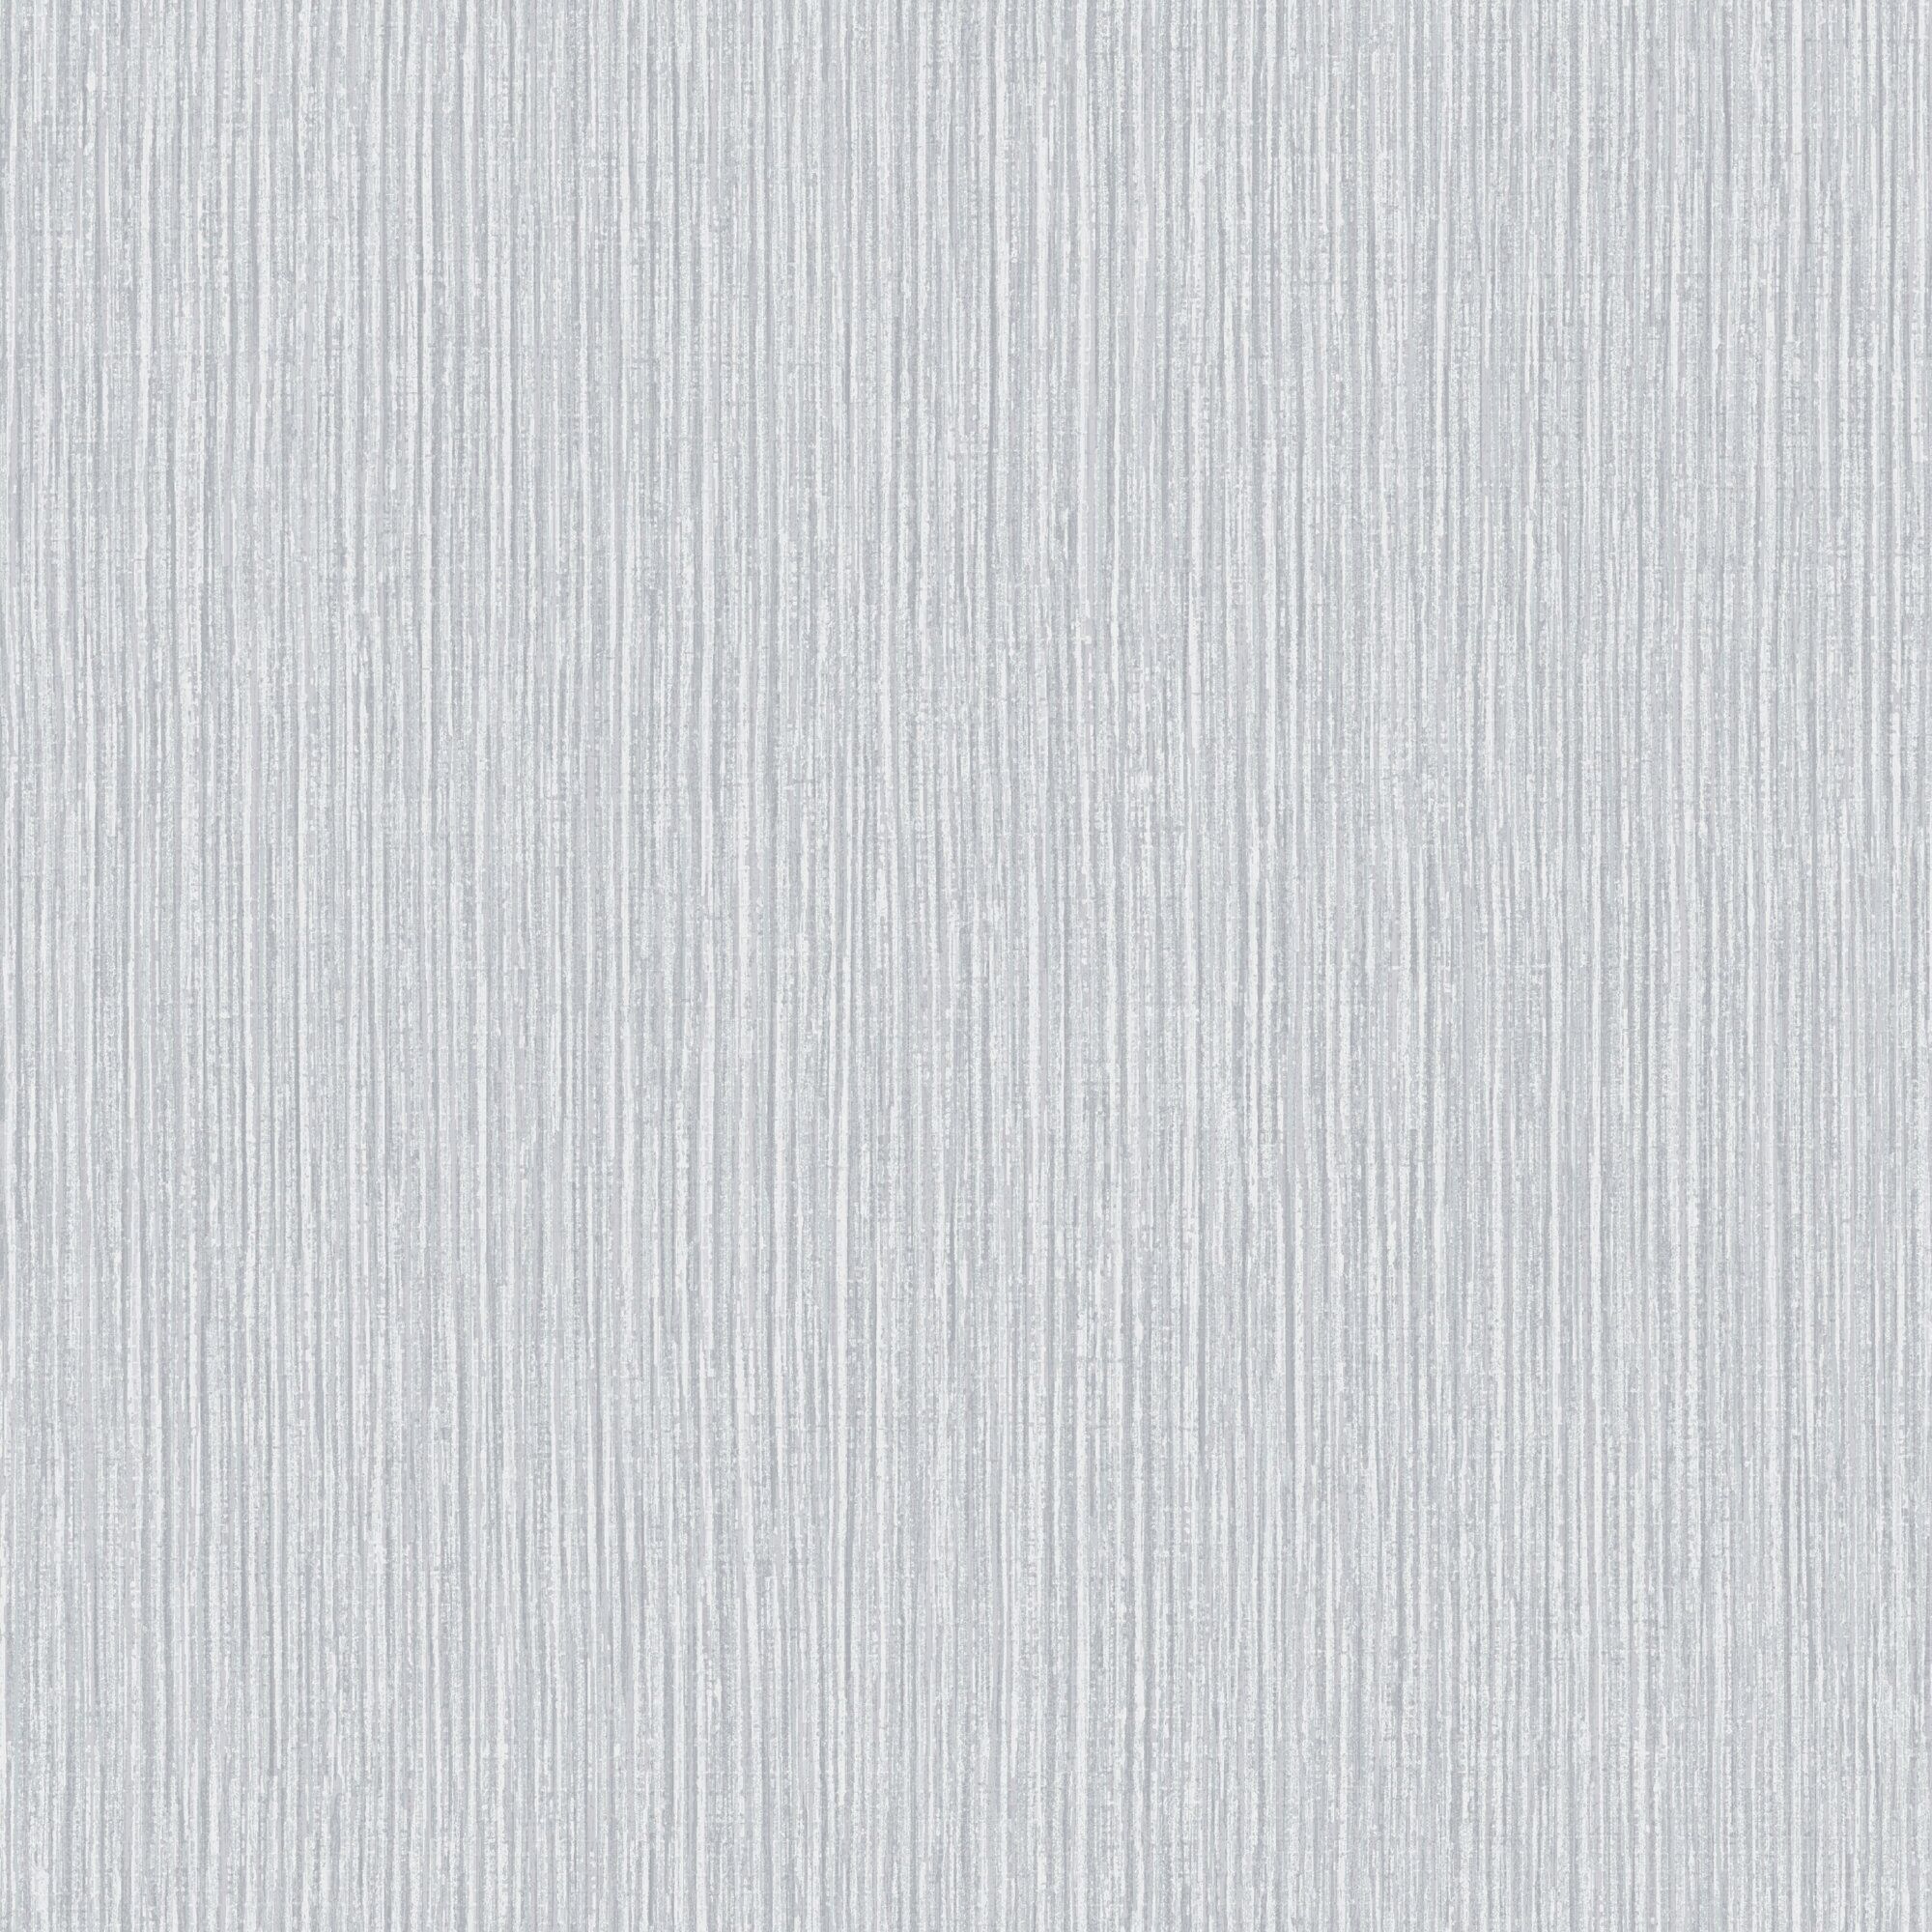 Gray Textured Wallpaper Phonewalpaperlist.com